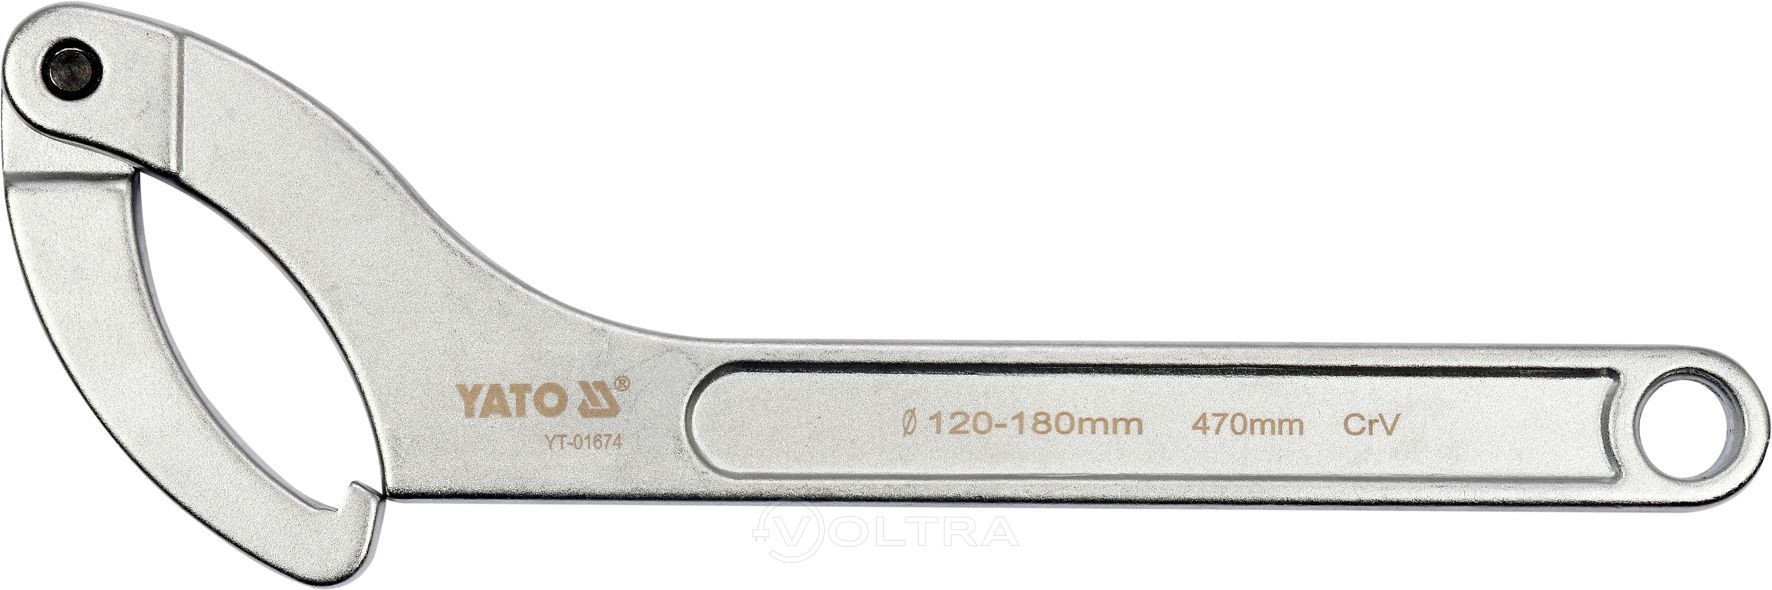 Ключ сегментный шарнирный 120-180мм Yato YT-01674